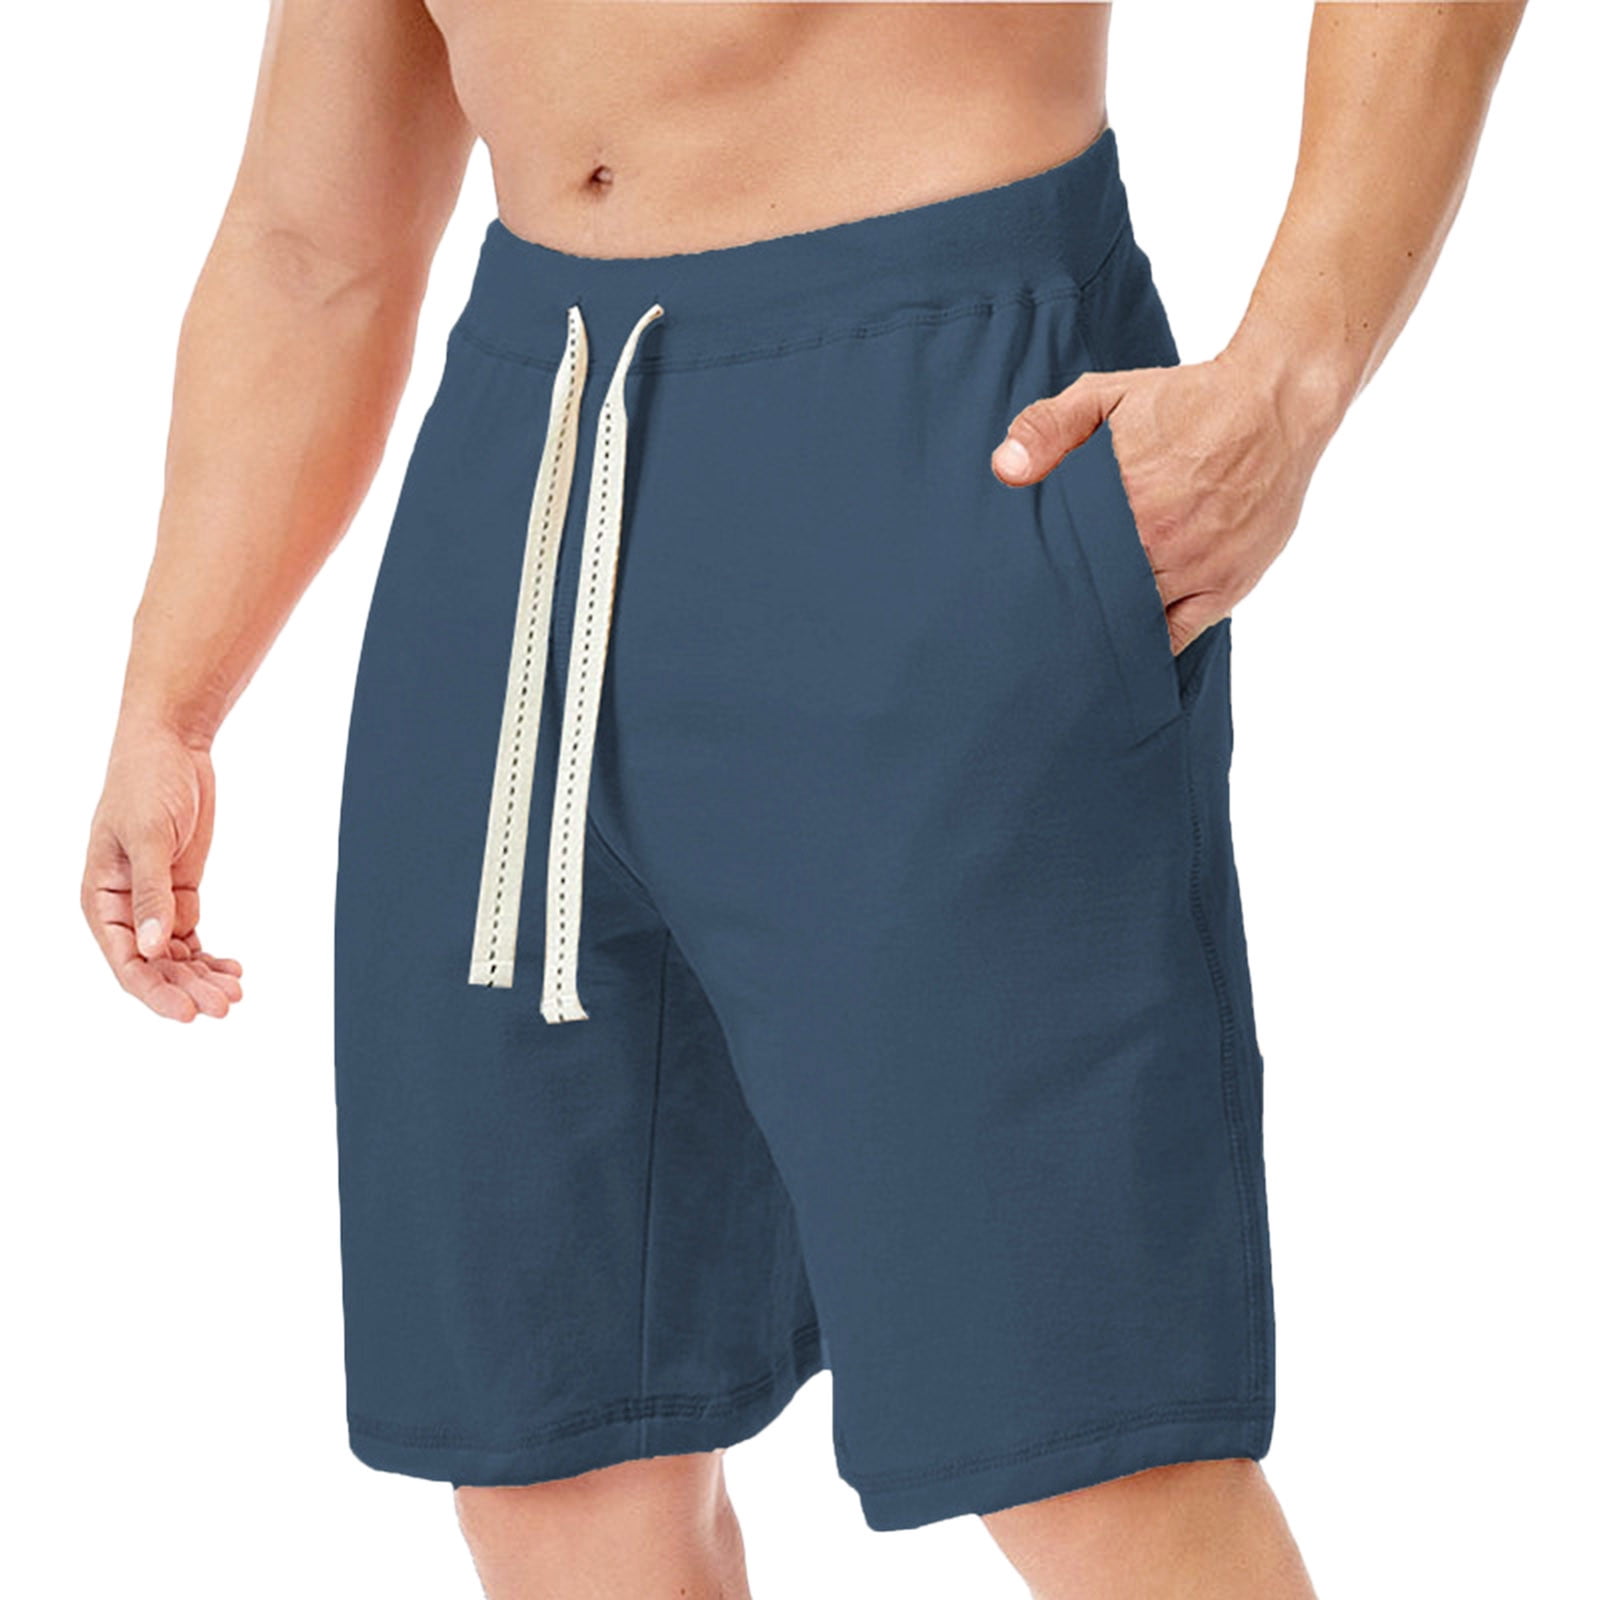 Men's Light Blue Athletic Shorts 6